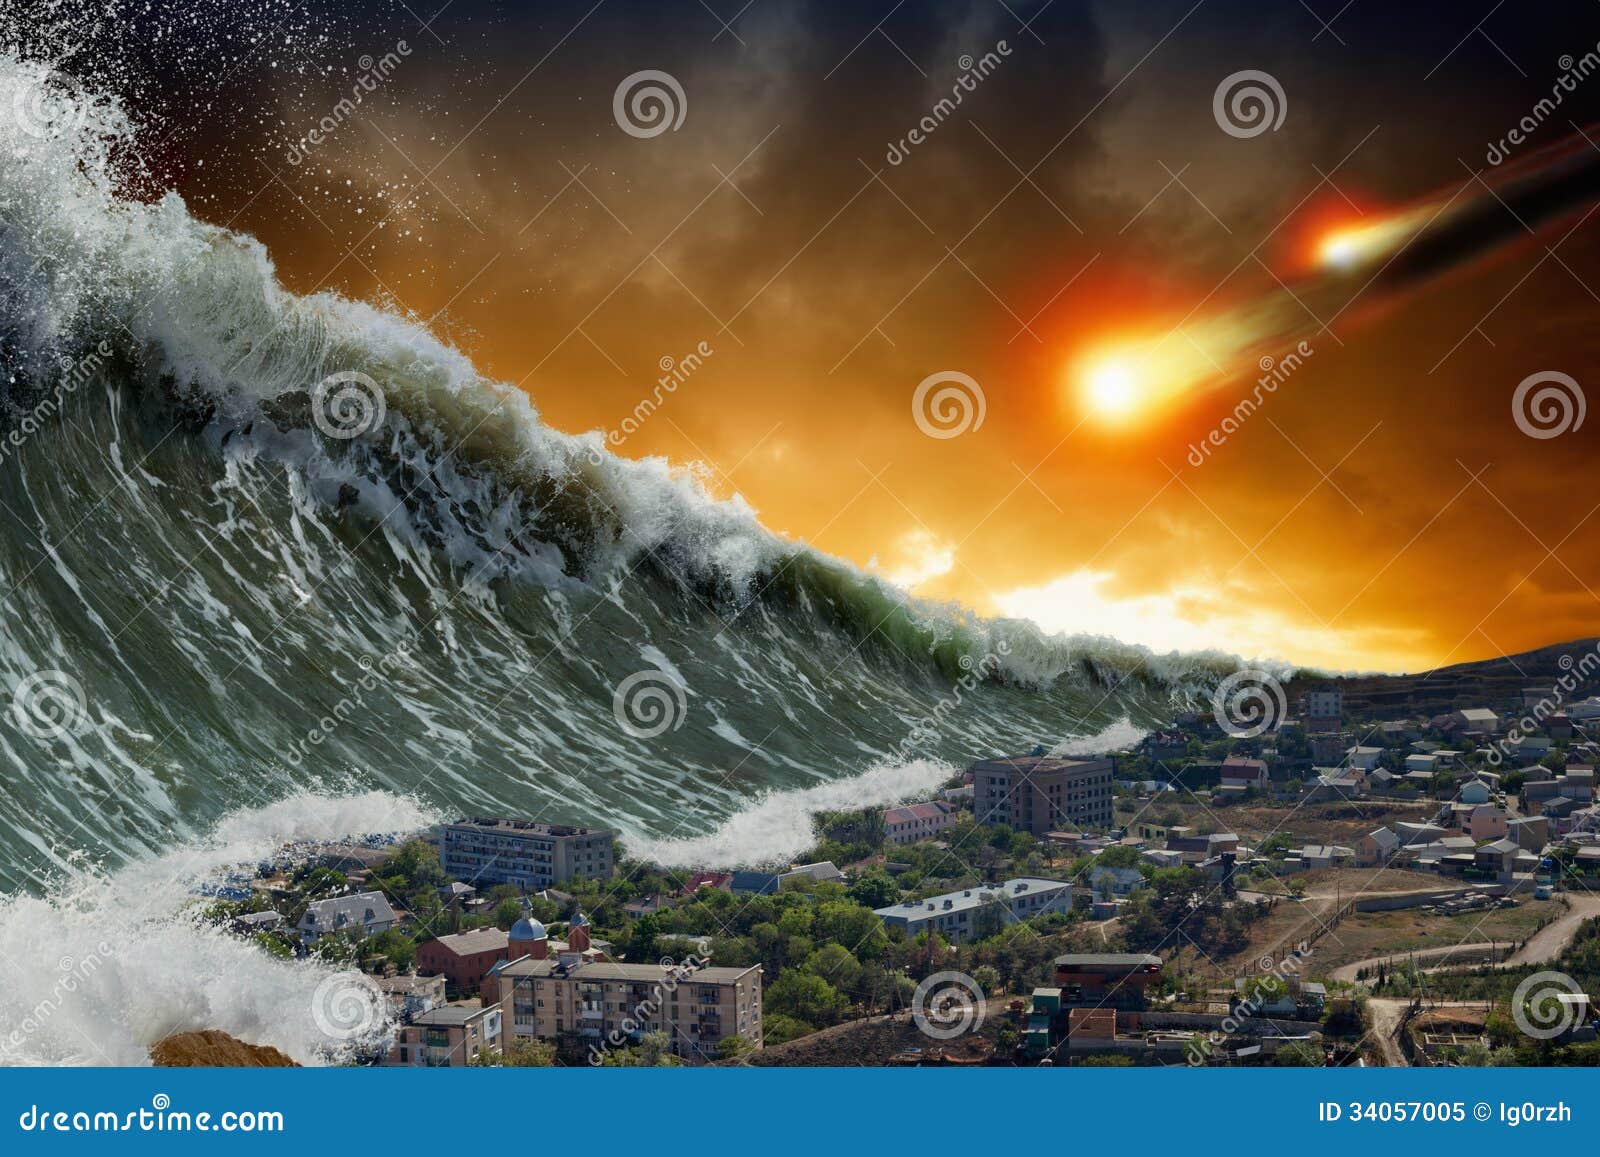 tsunami waves, asteroid impact